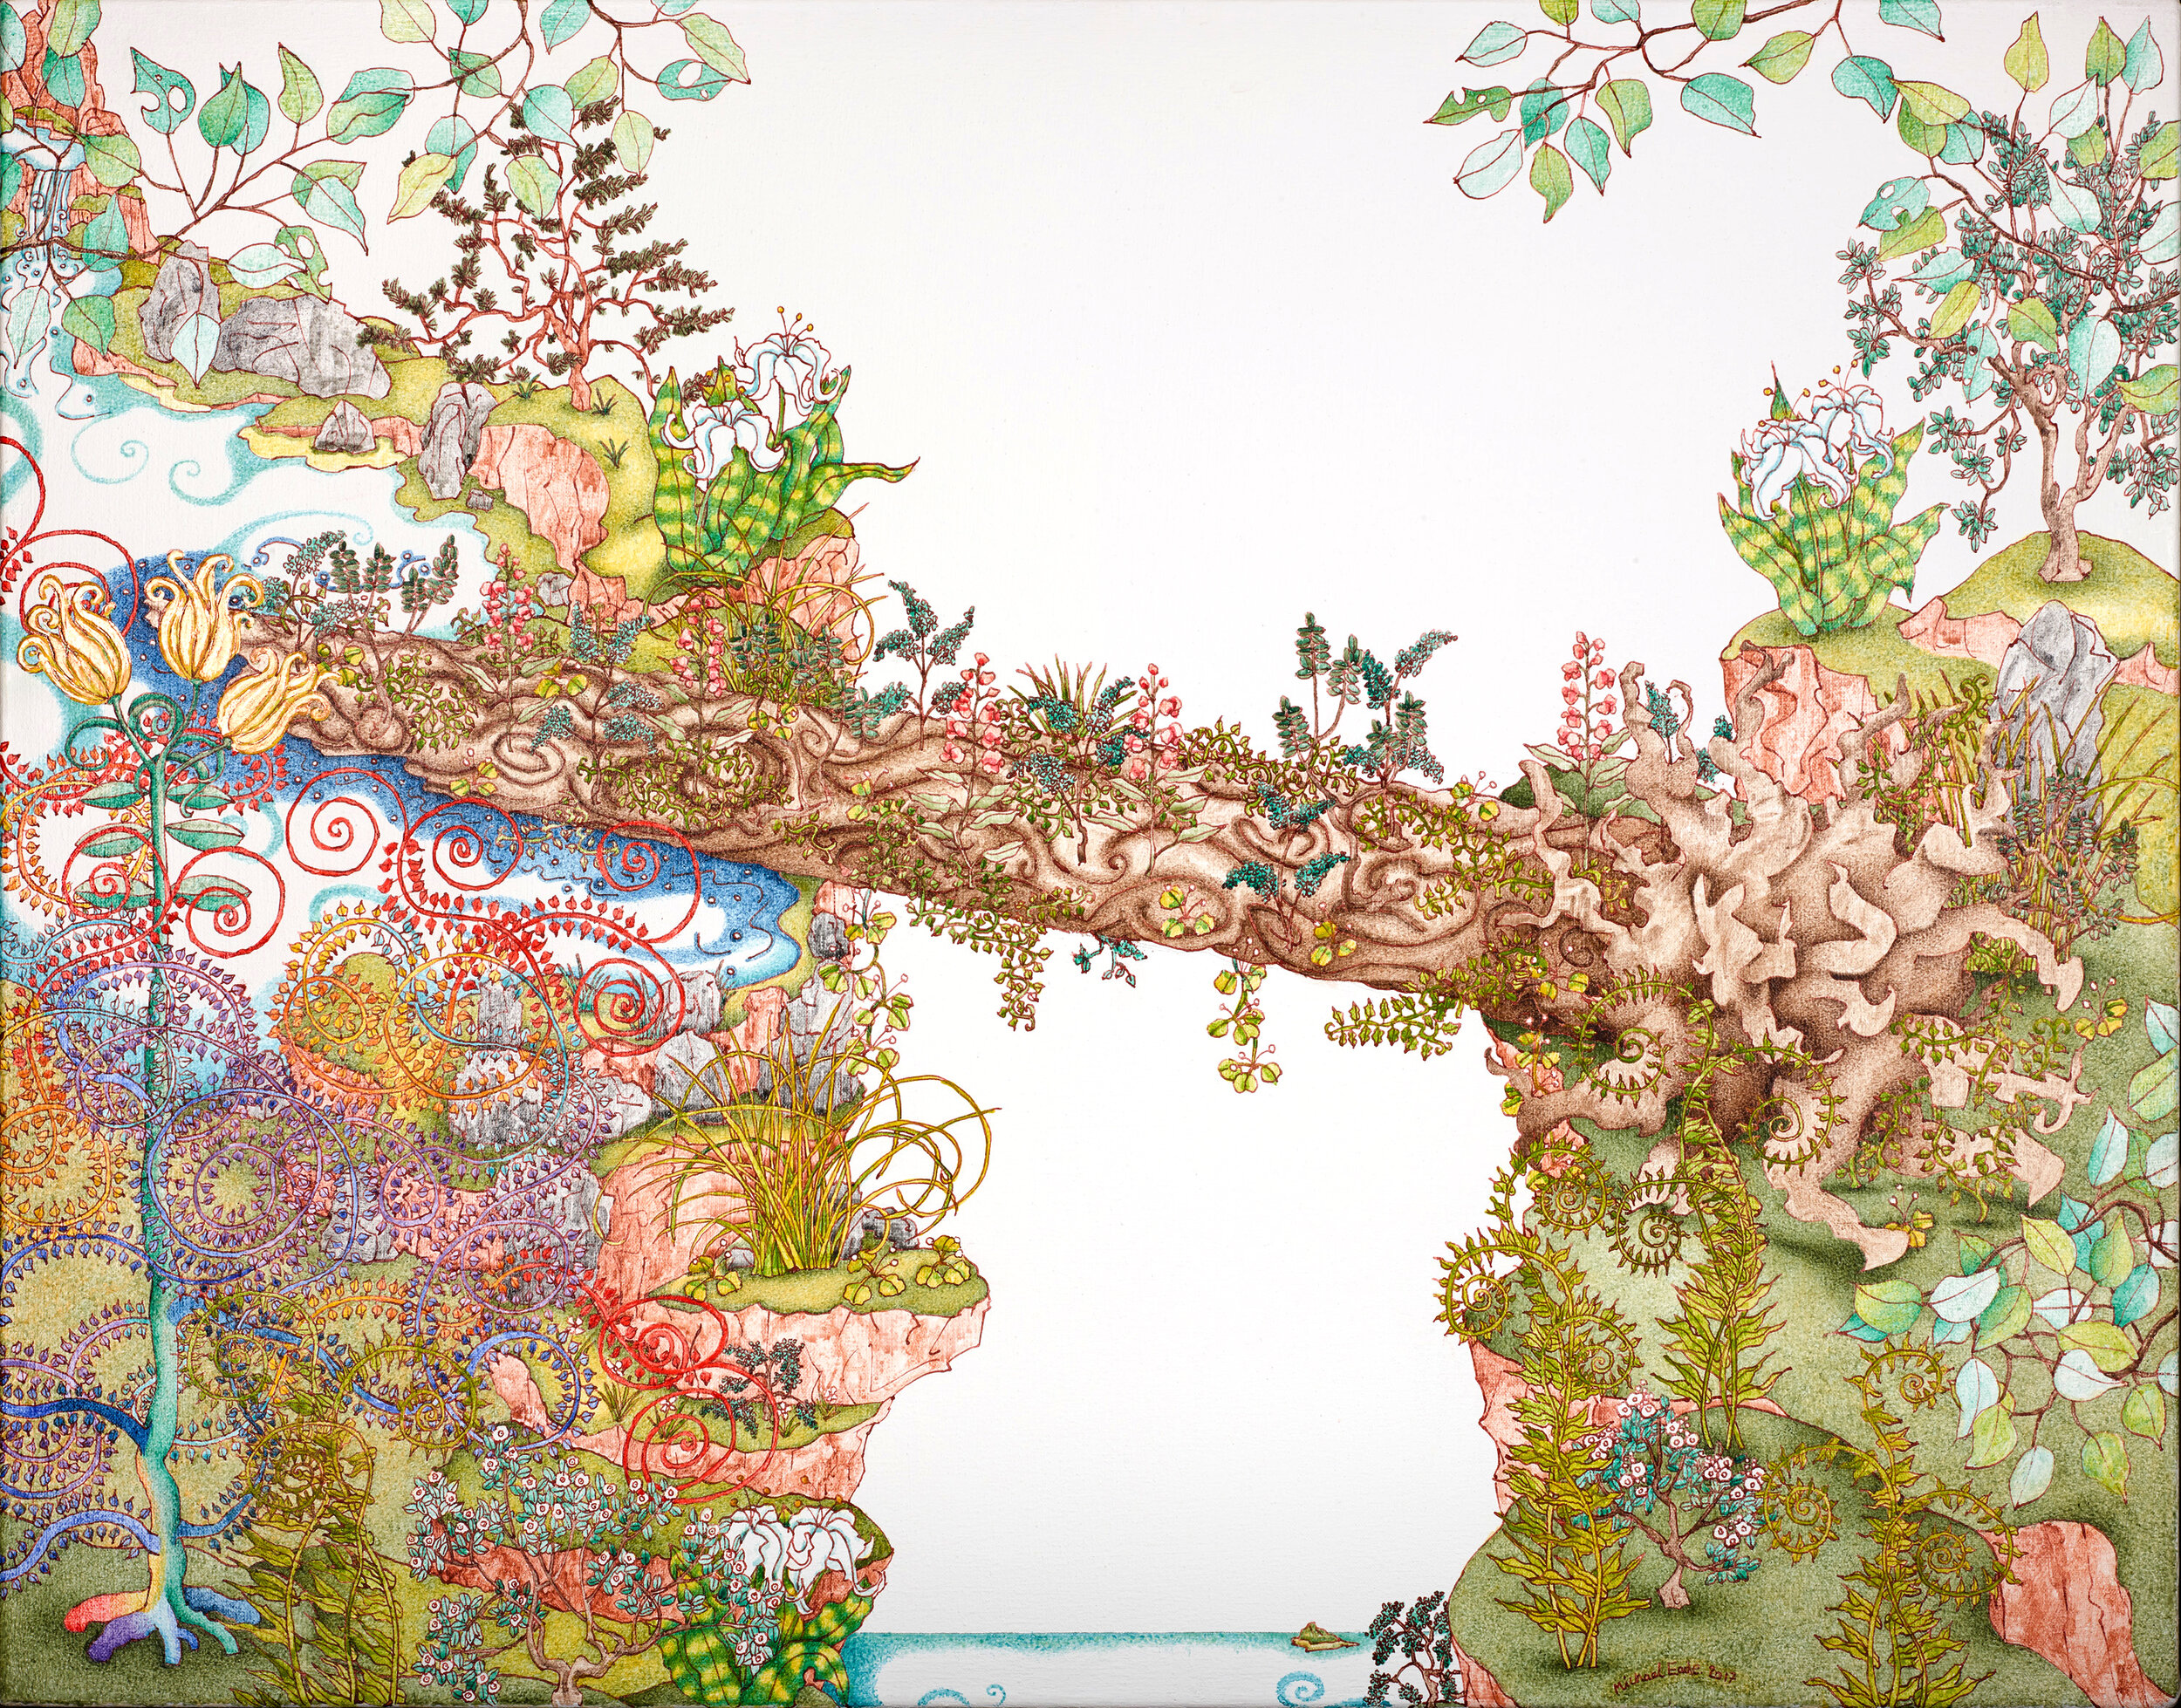  Michael Eade.  Nurse Log Bridge  哺木桥，Egg tempera, raised copper leaf and oil on canvas, 22 × 28 in. (55.8 x 71.1 cm), 2017. 